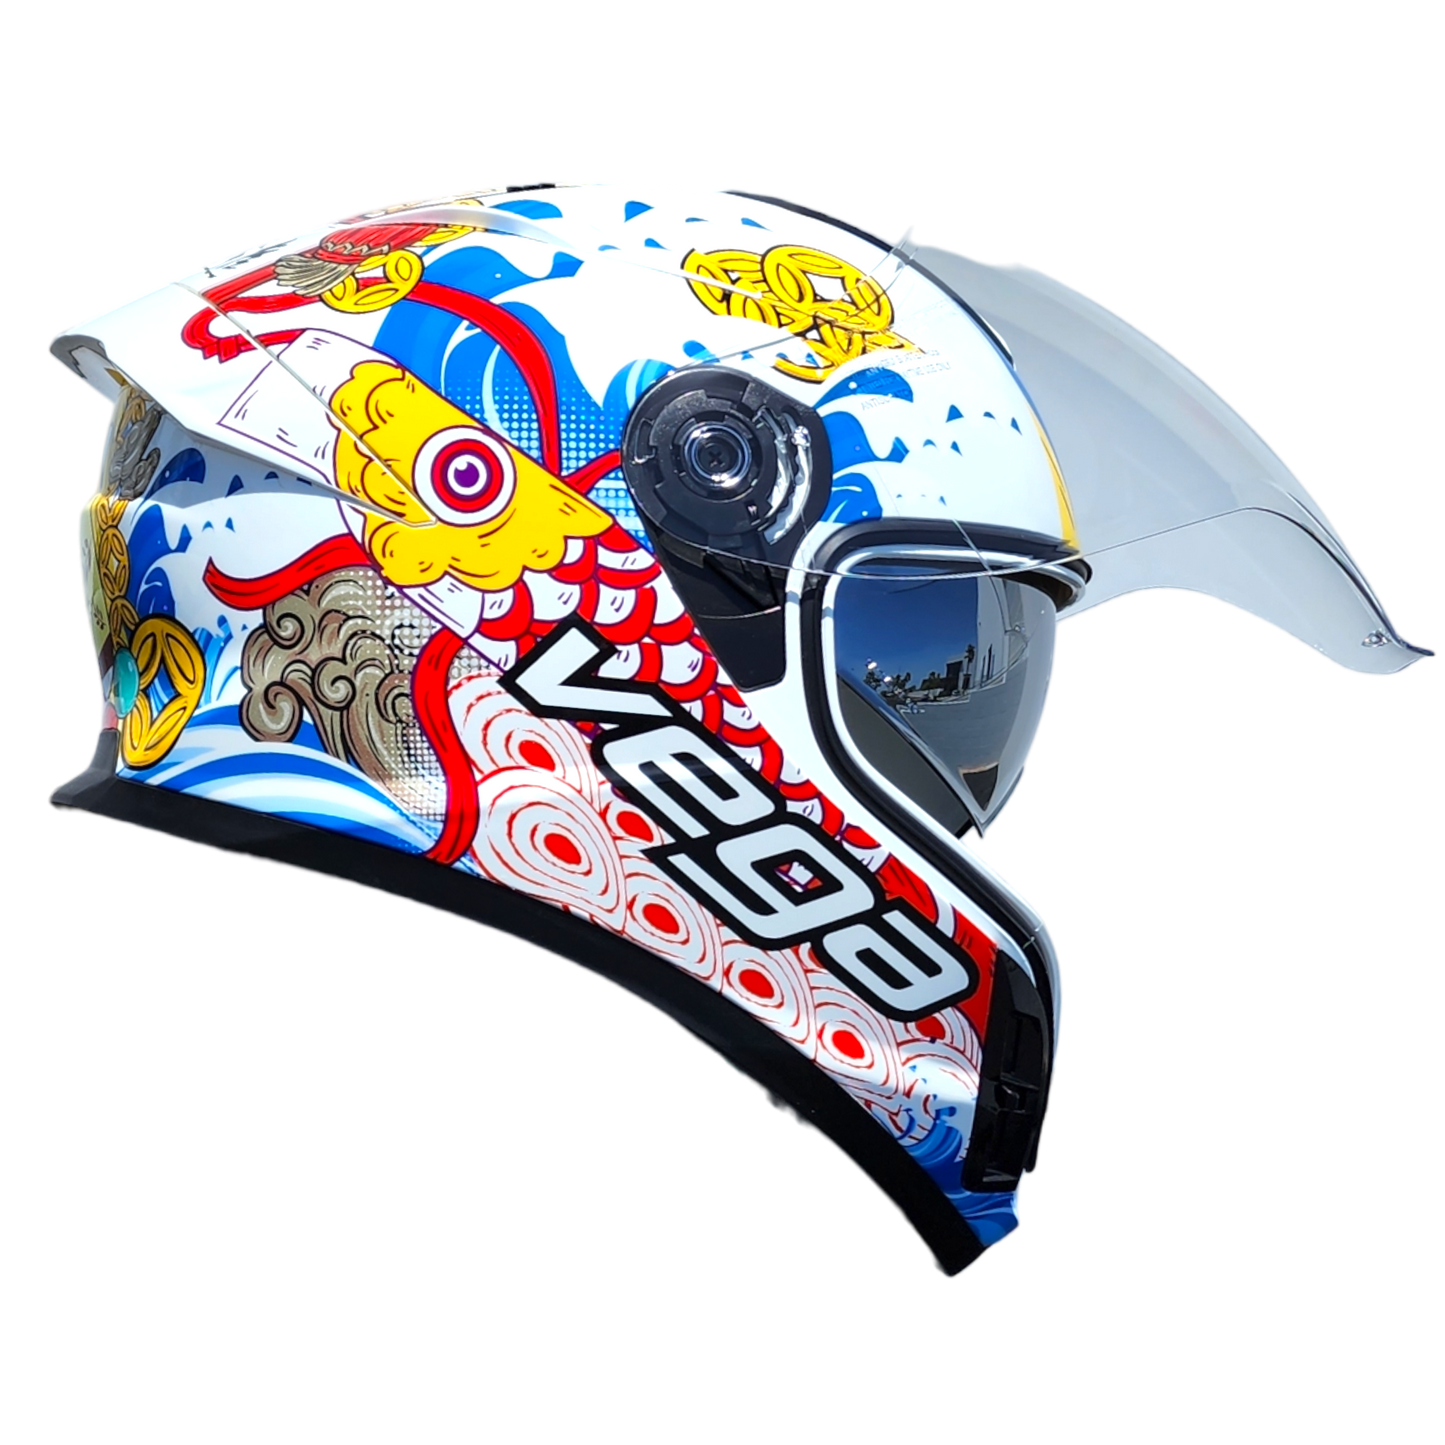 Vega AIR GPX Motorcycle Helmet - Special Innovated Design